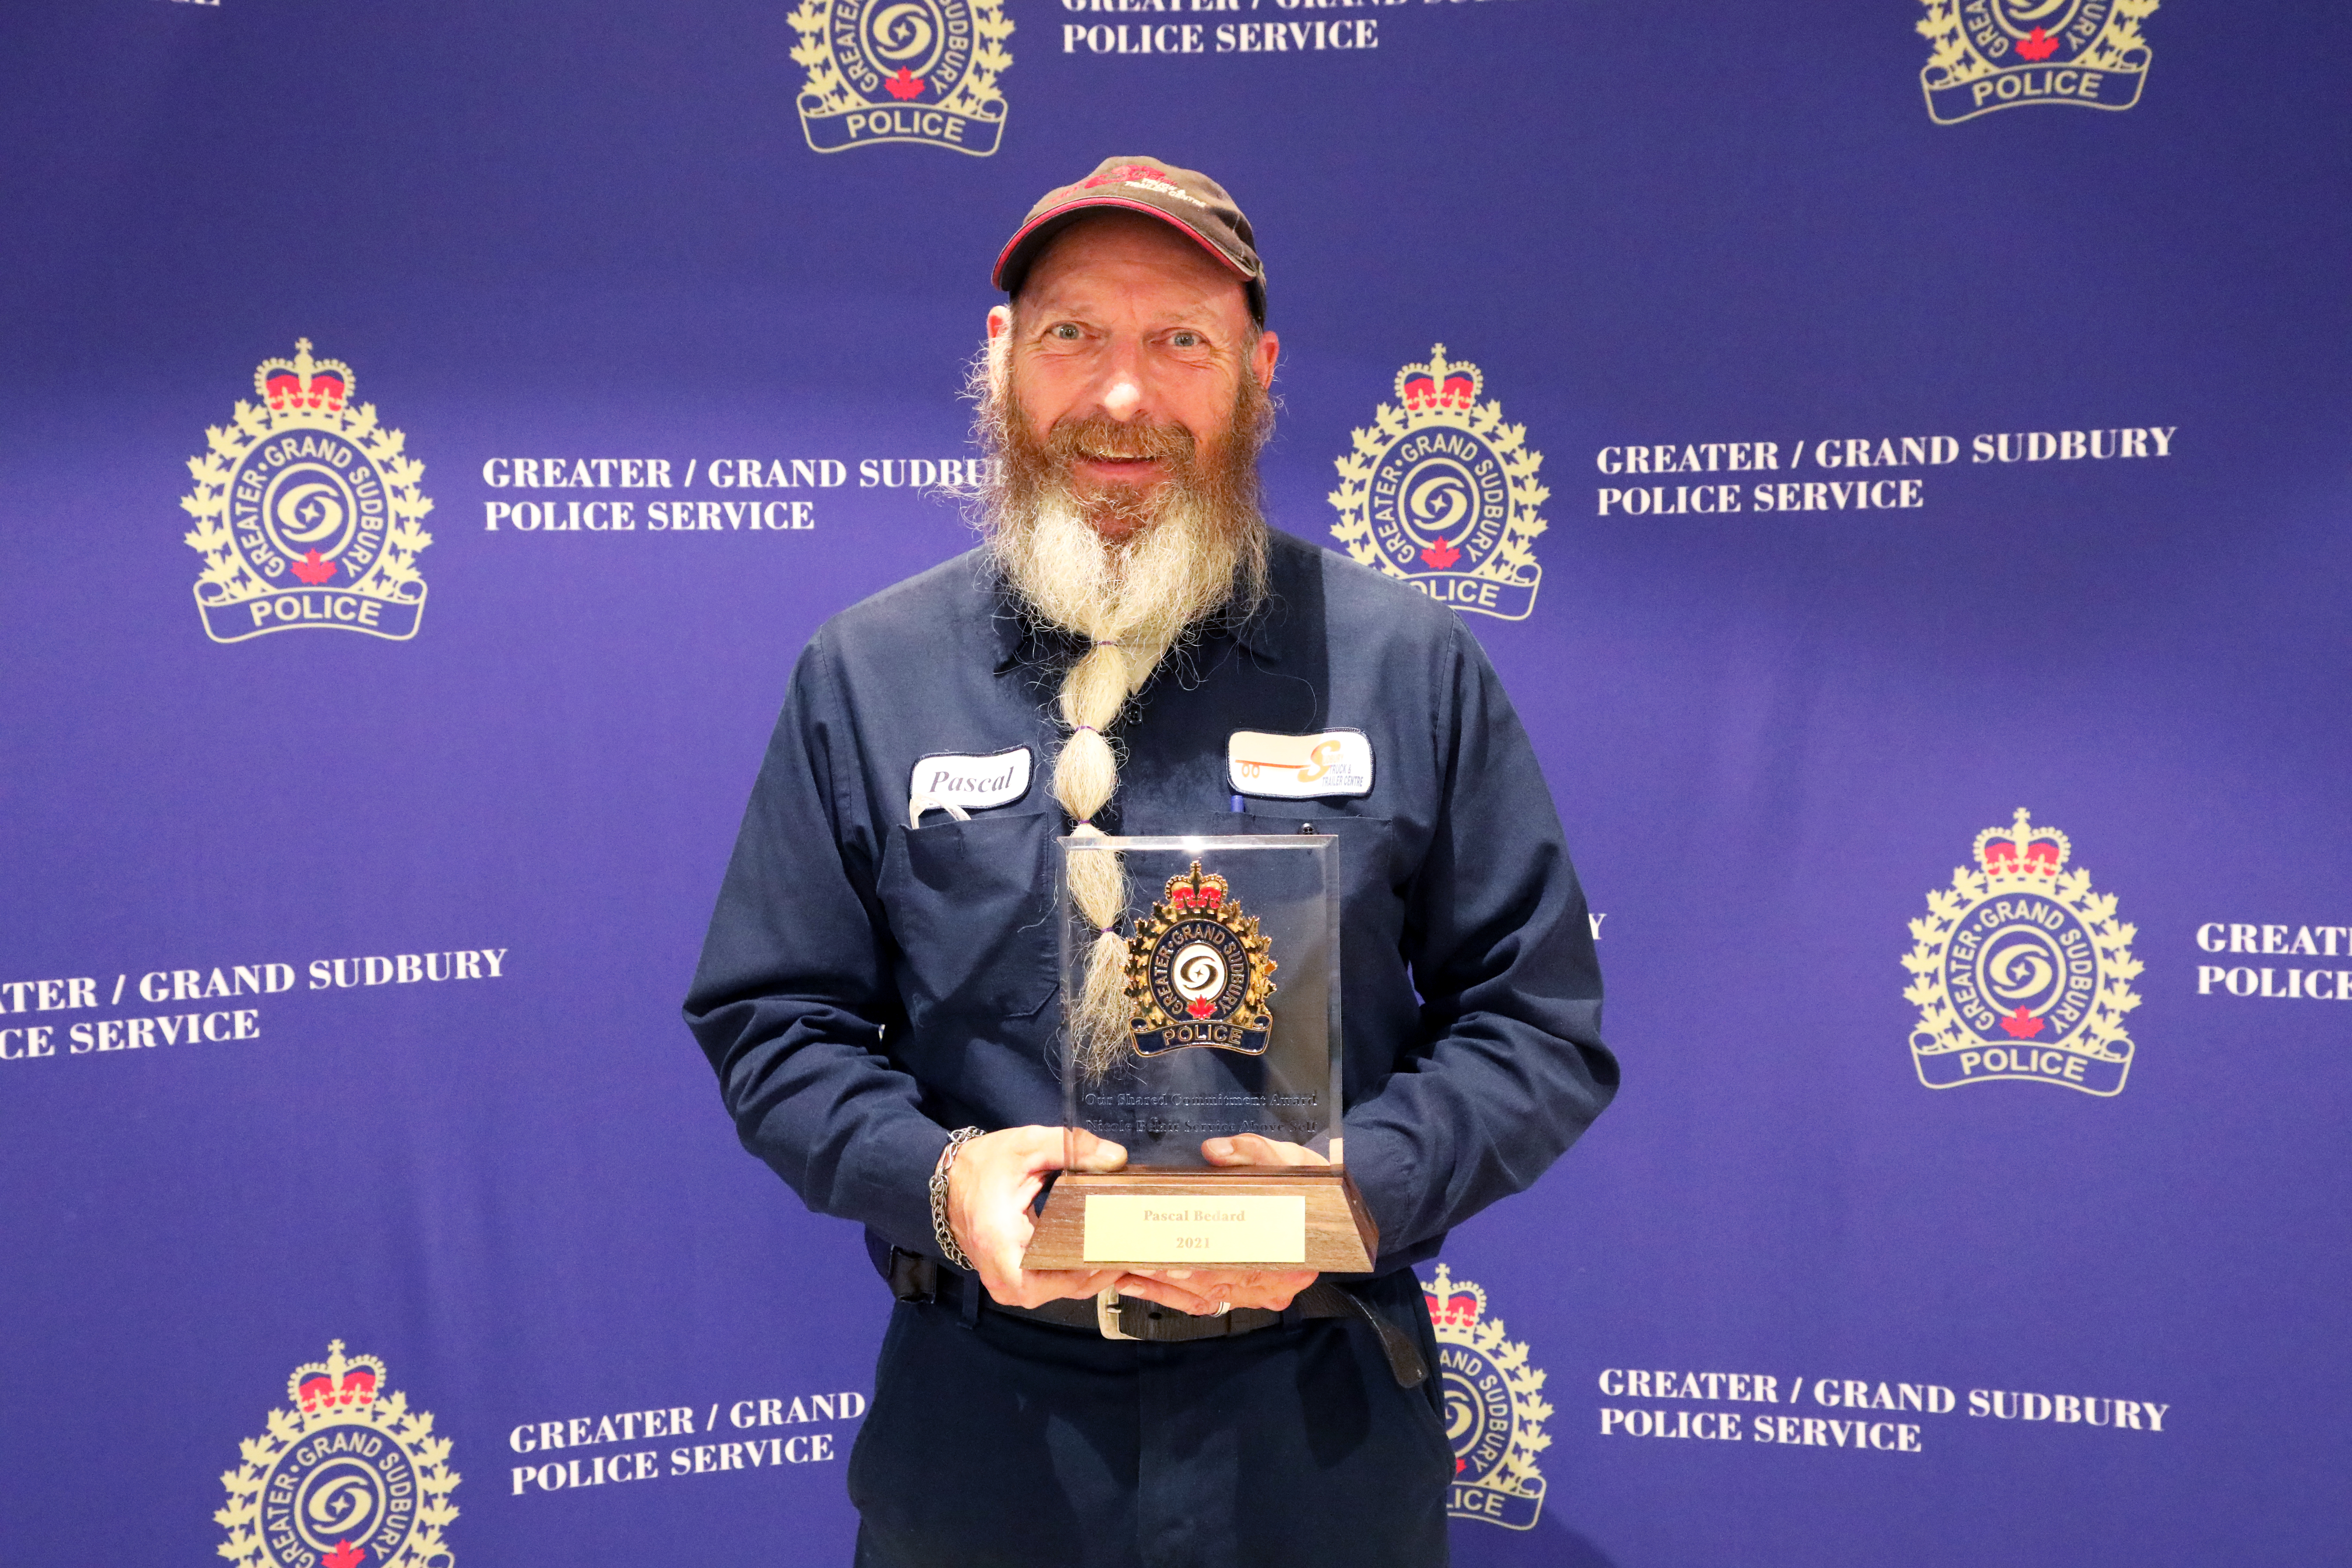 Man smiling and holding award